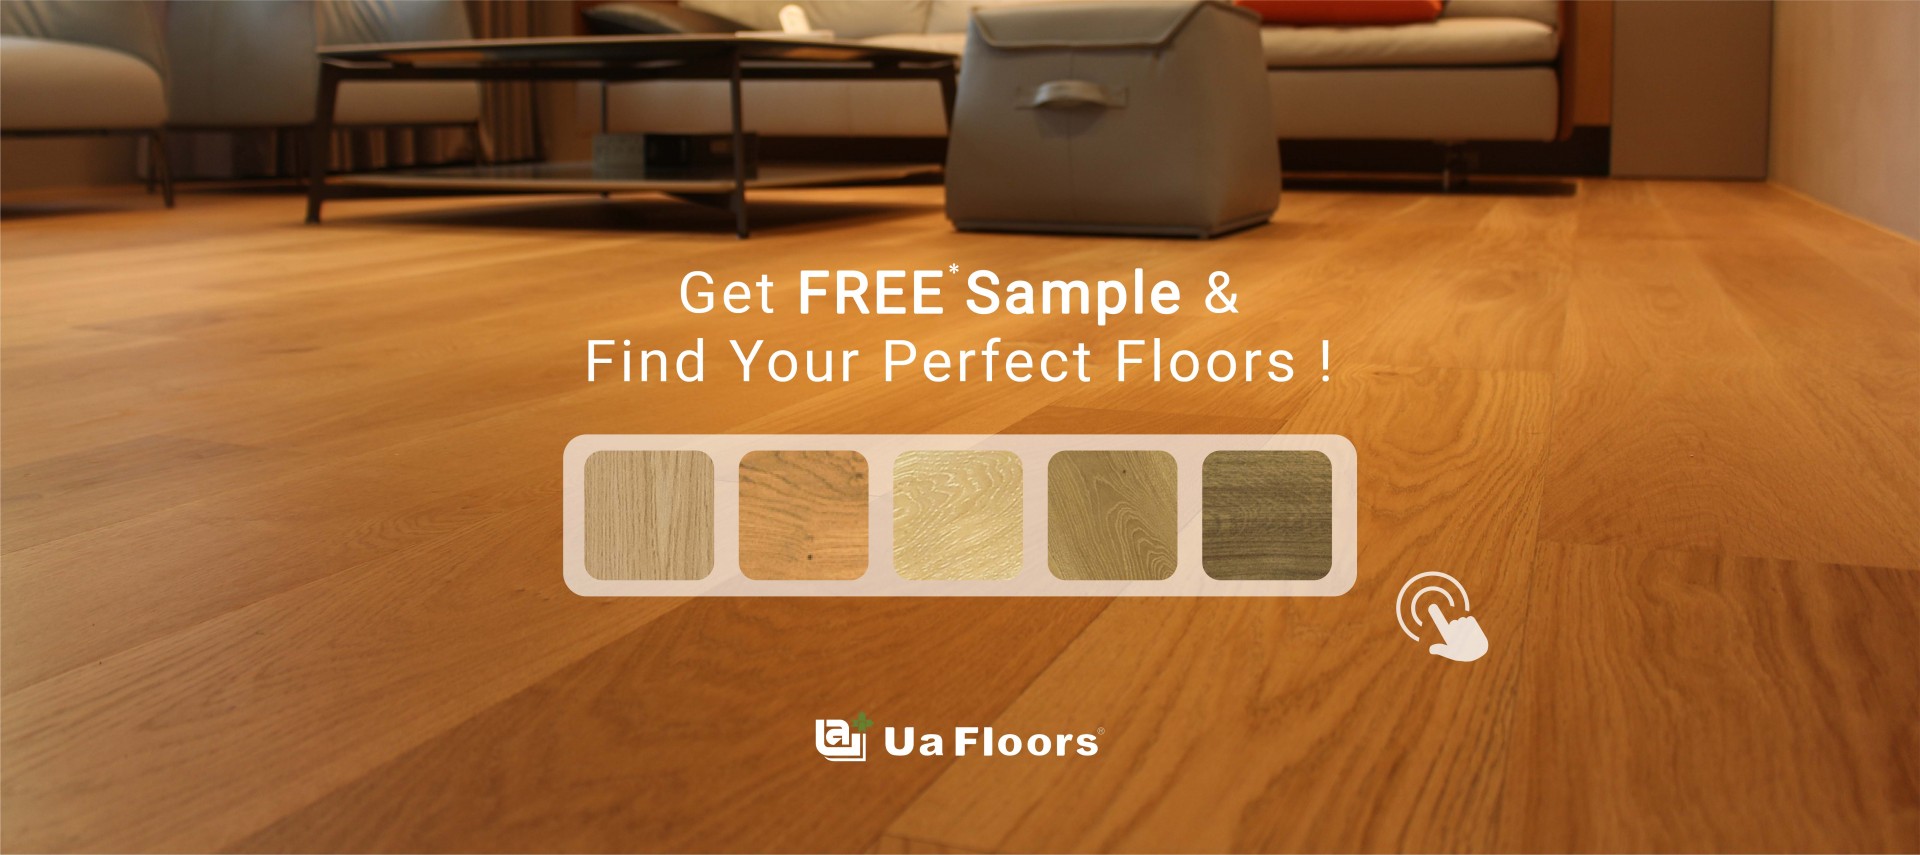 Ua Floors - ABOUT US|Get Free Sample！ 